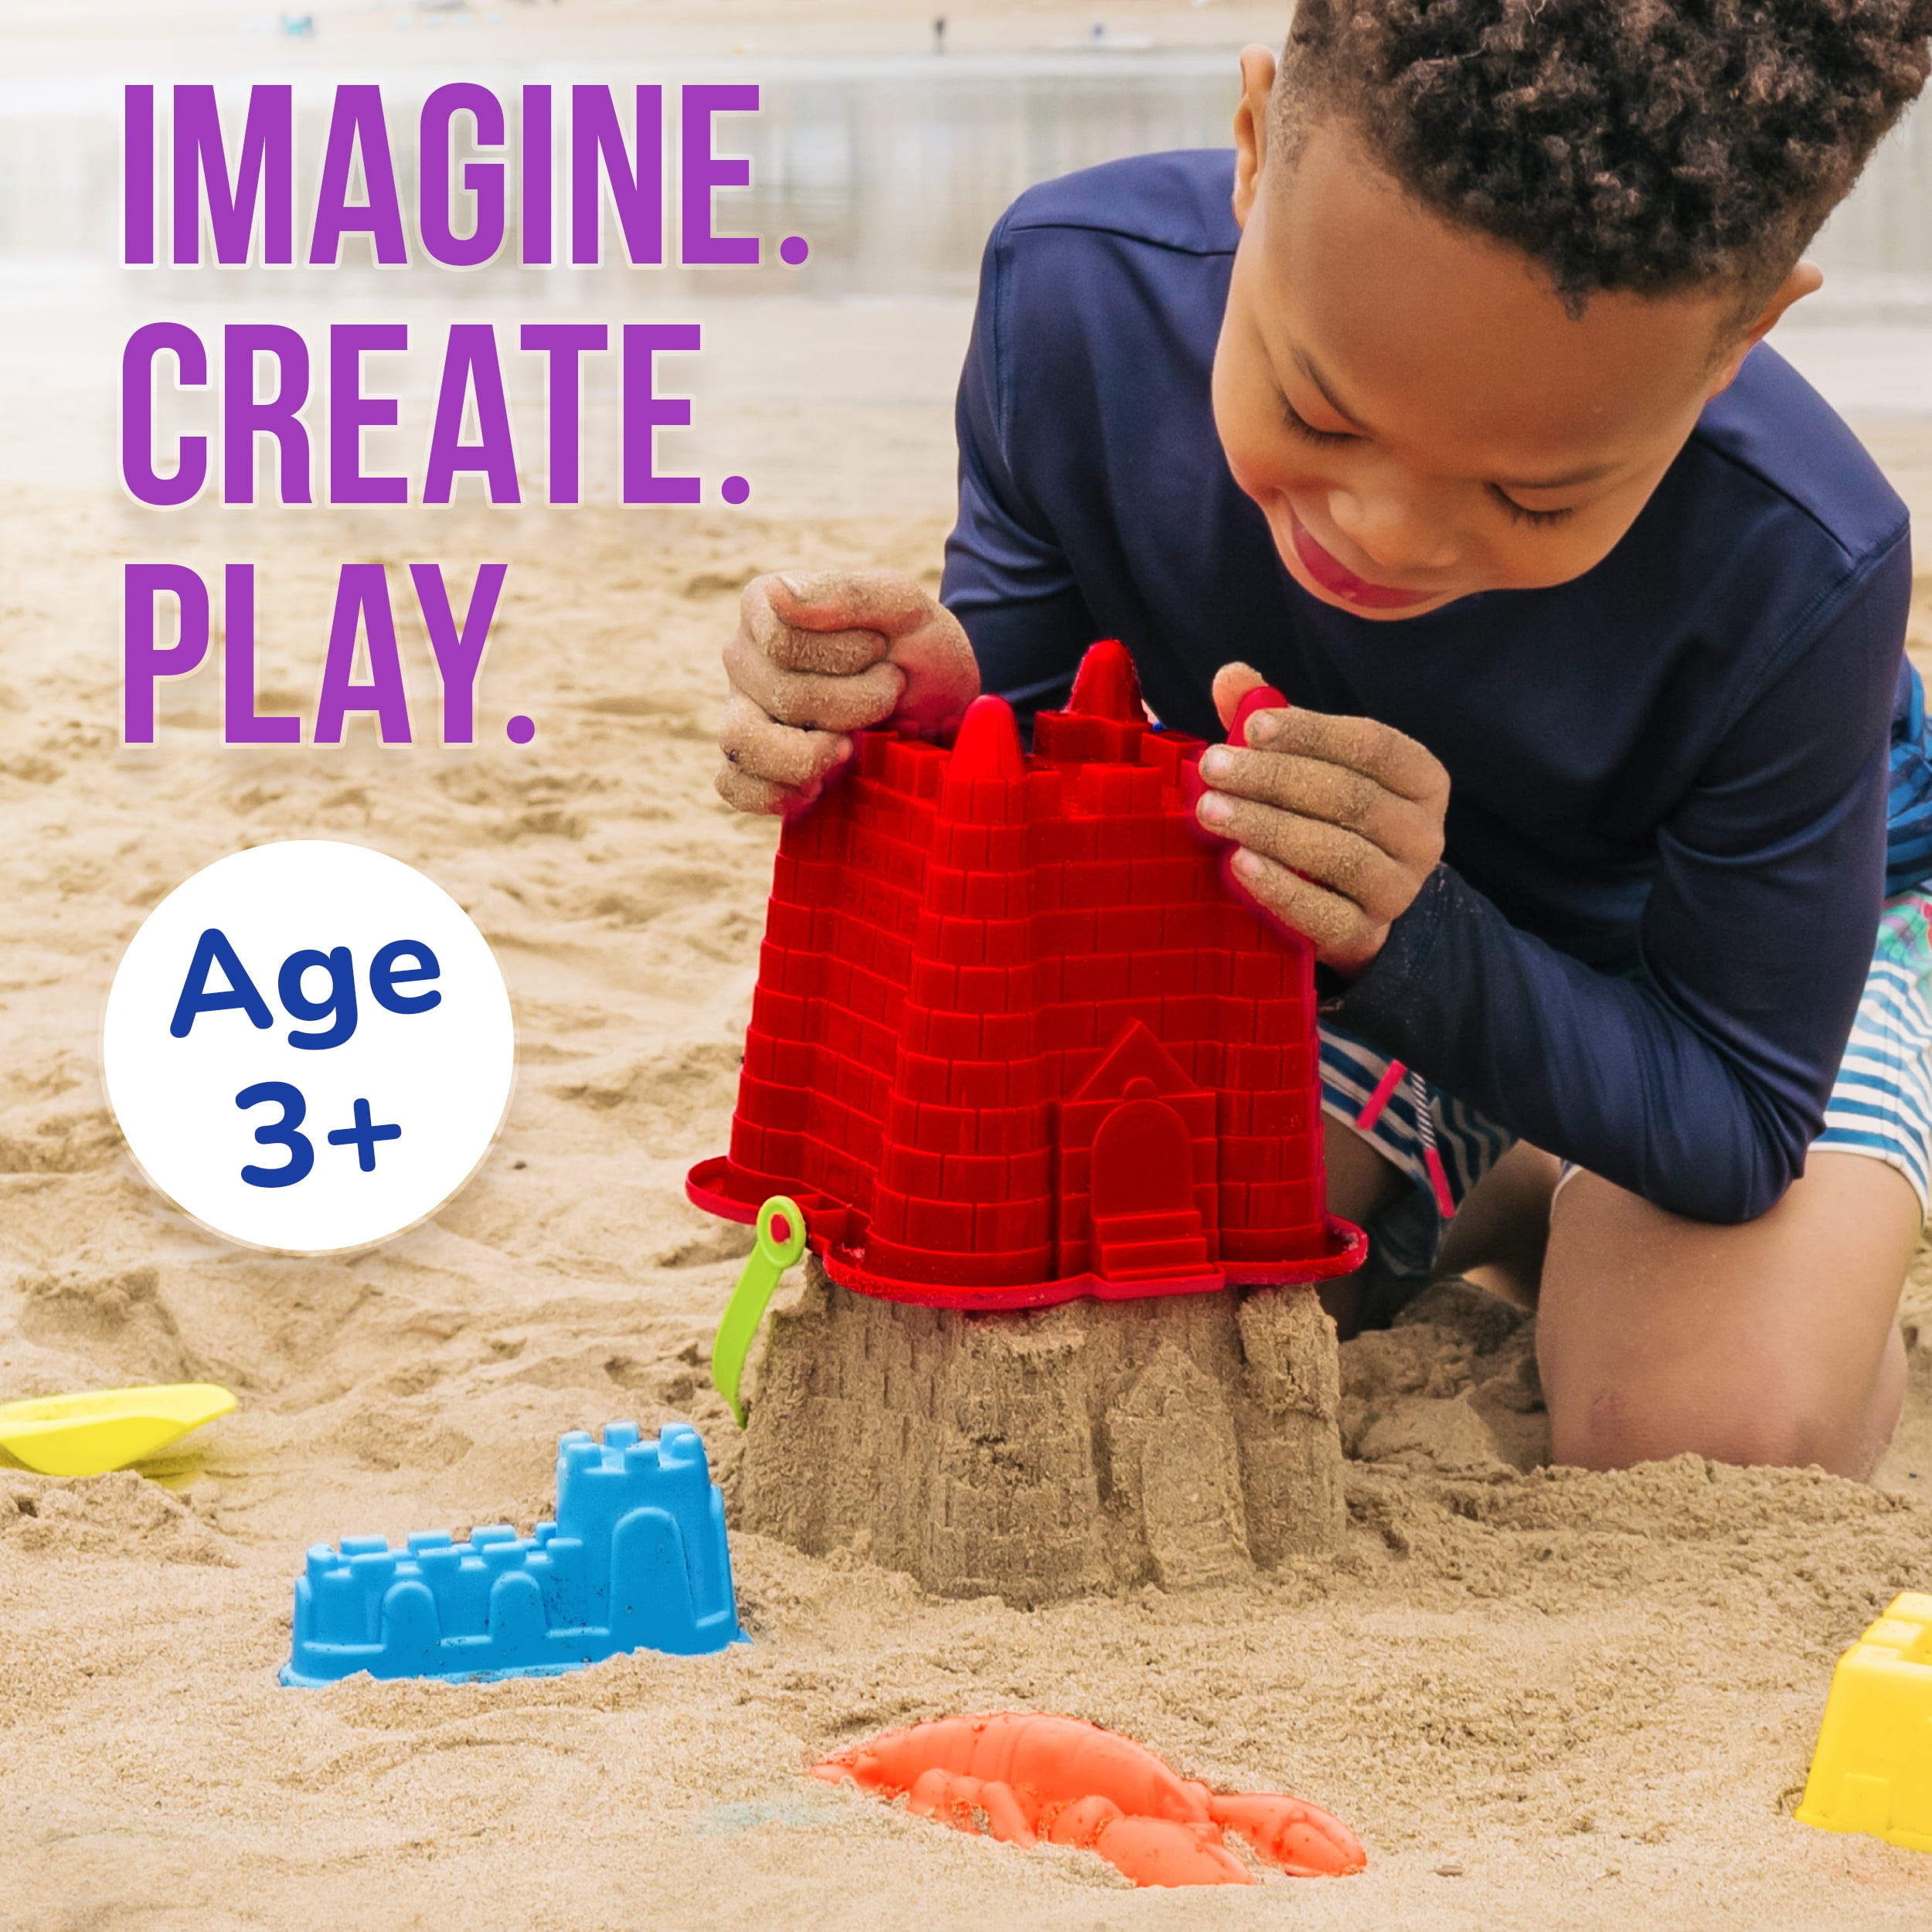 Click N Play 13 Piece Castle Mold beach toy Set 